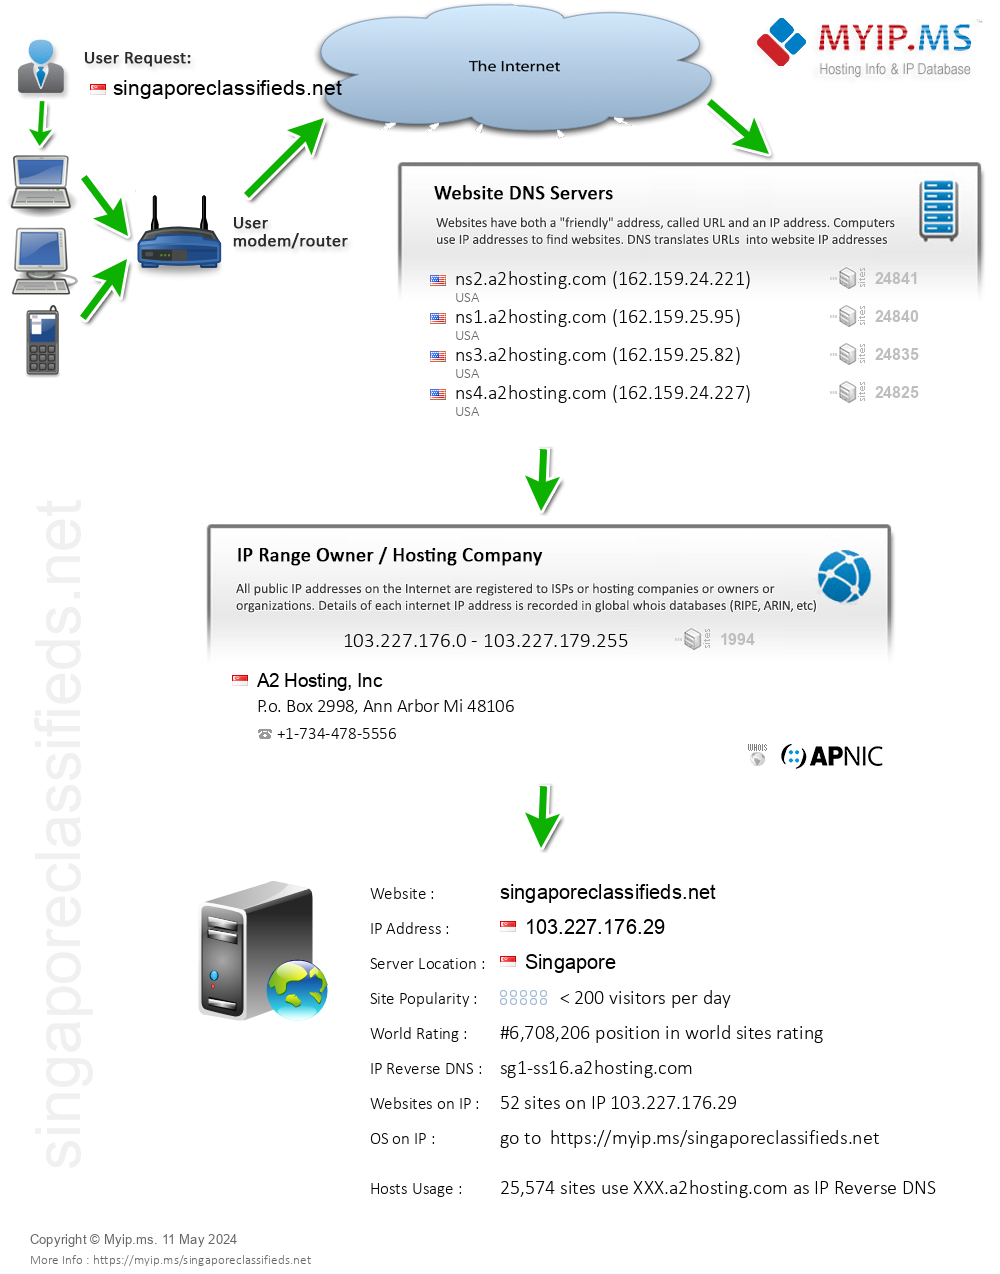 Singaporeclassifieds.net - Website Hosting Visual IP Diagram